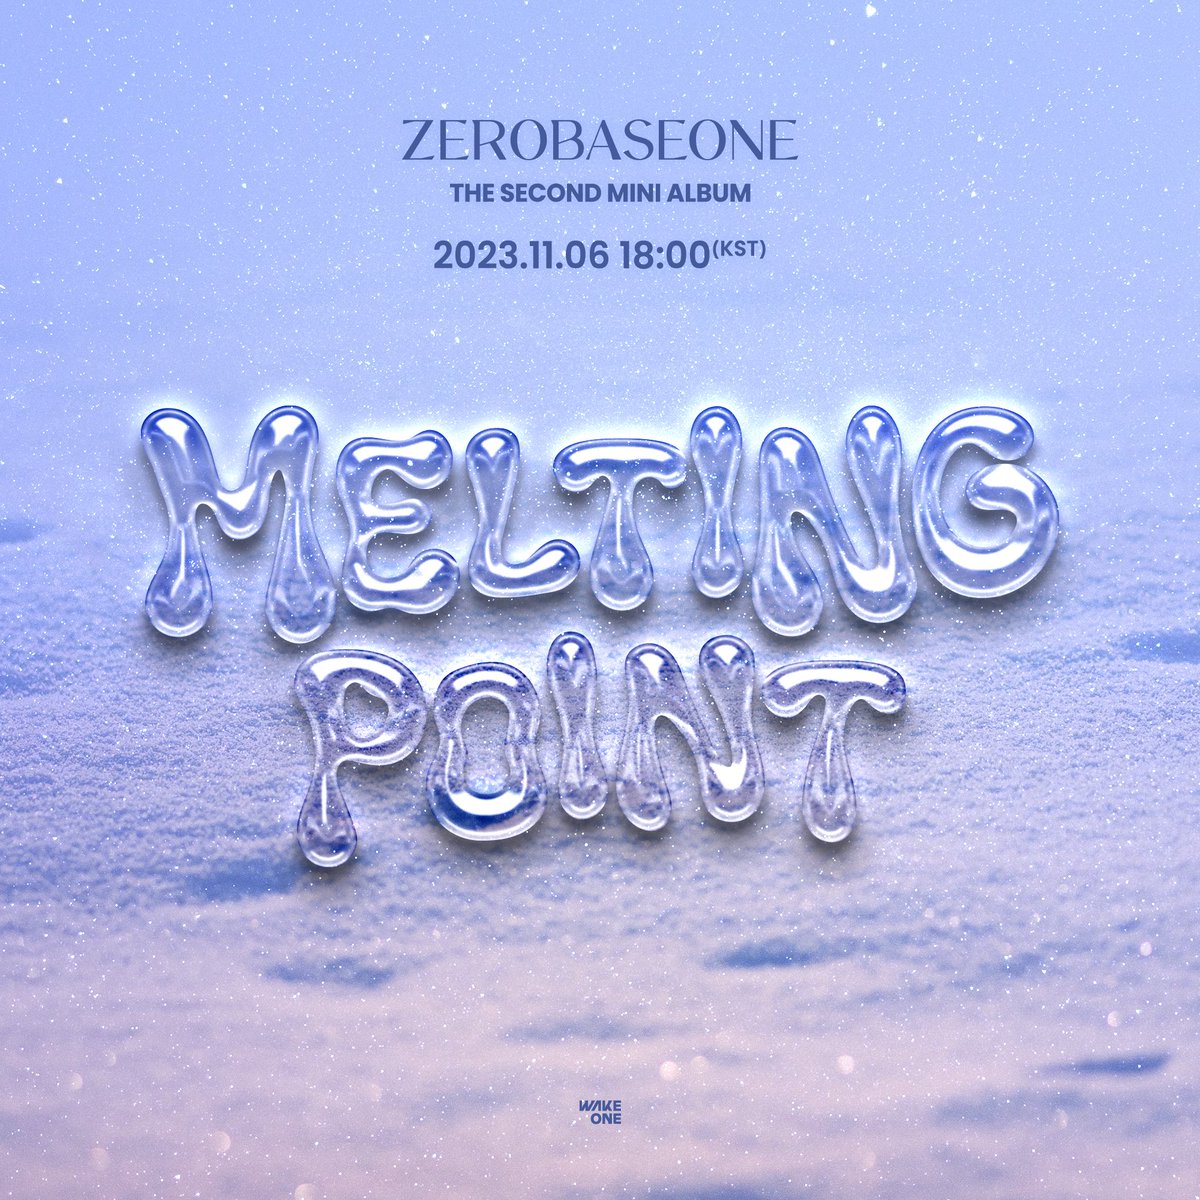 ZEROBASEONE The 2nd Mini Album [𝗠𝗘𝗟𝗧𝗜𝗡𝗚 𝗣𝗢𝗜𝗡𝗧] Poster 2023.11.06 18:00 (KST) #ZEROBASEONE #ZB1 #제로베이스원 #MELTINGPOINT